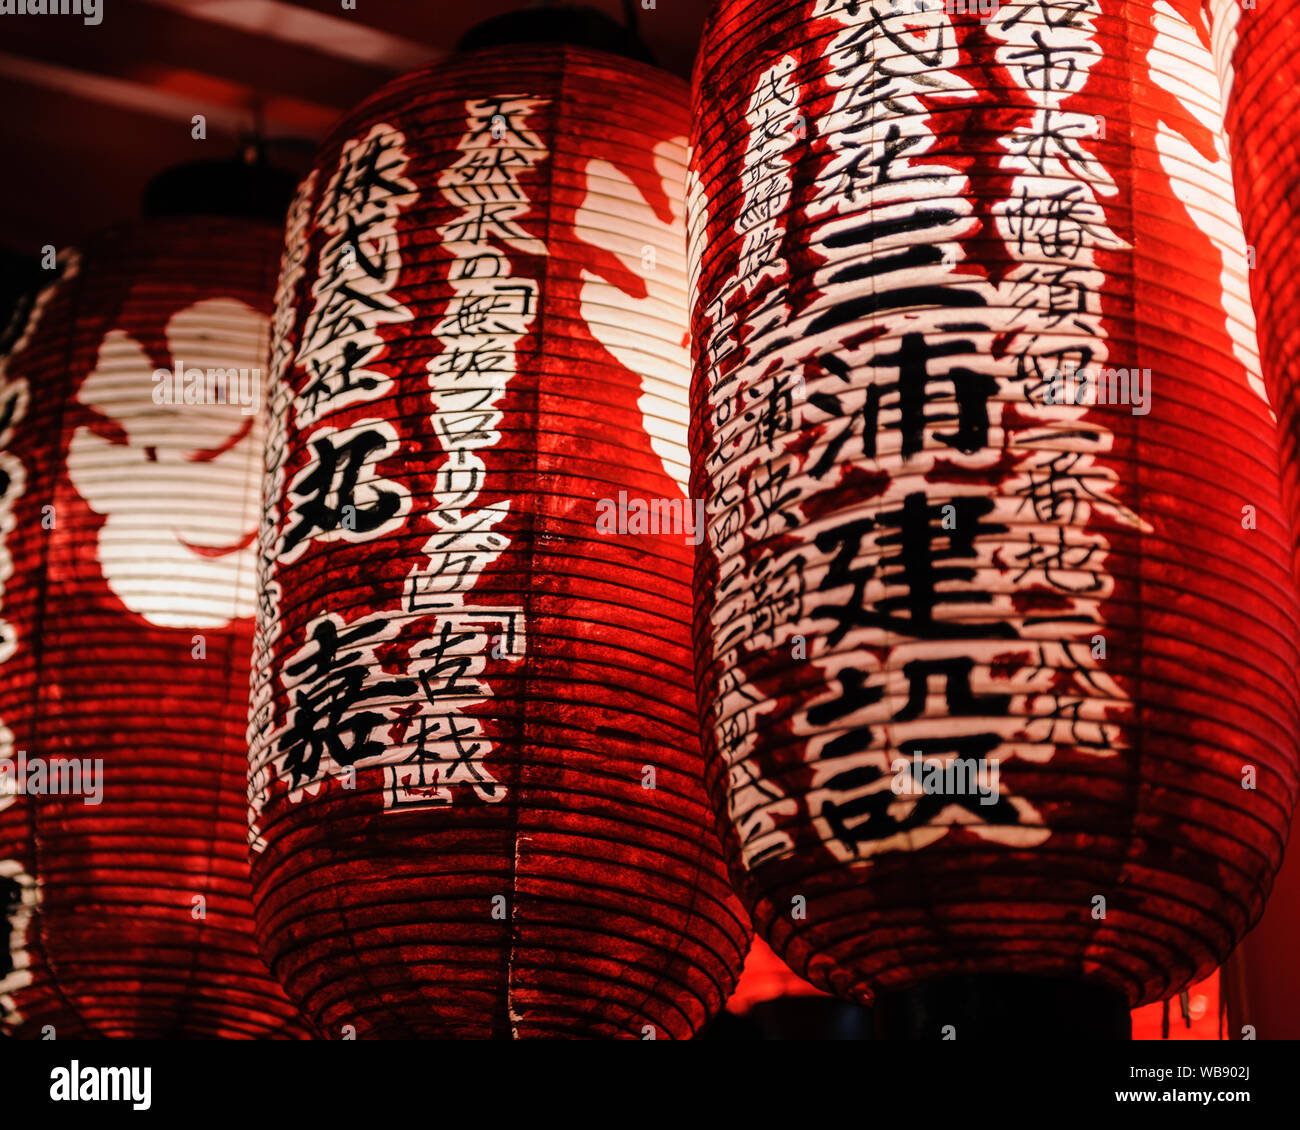 alamy stock photo japanese lantern